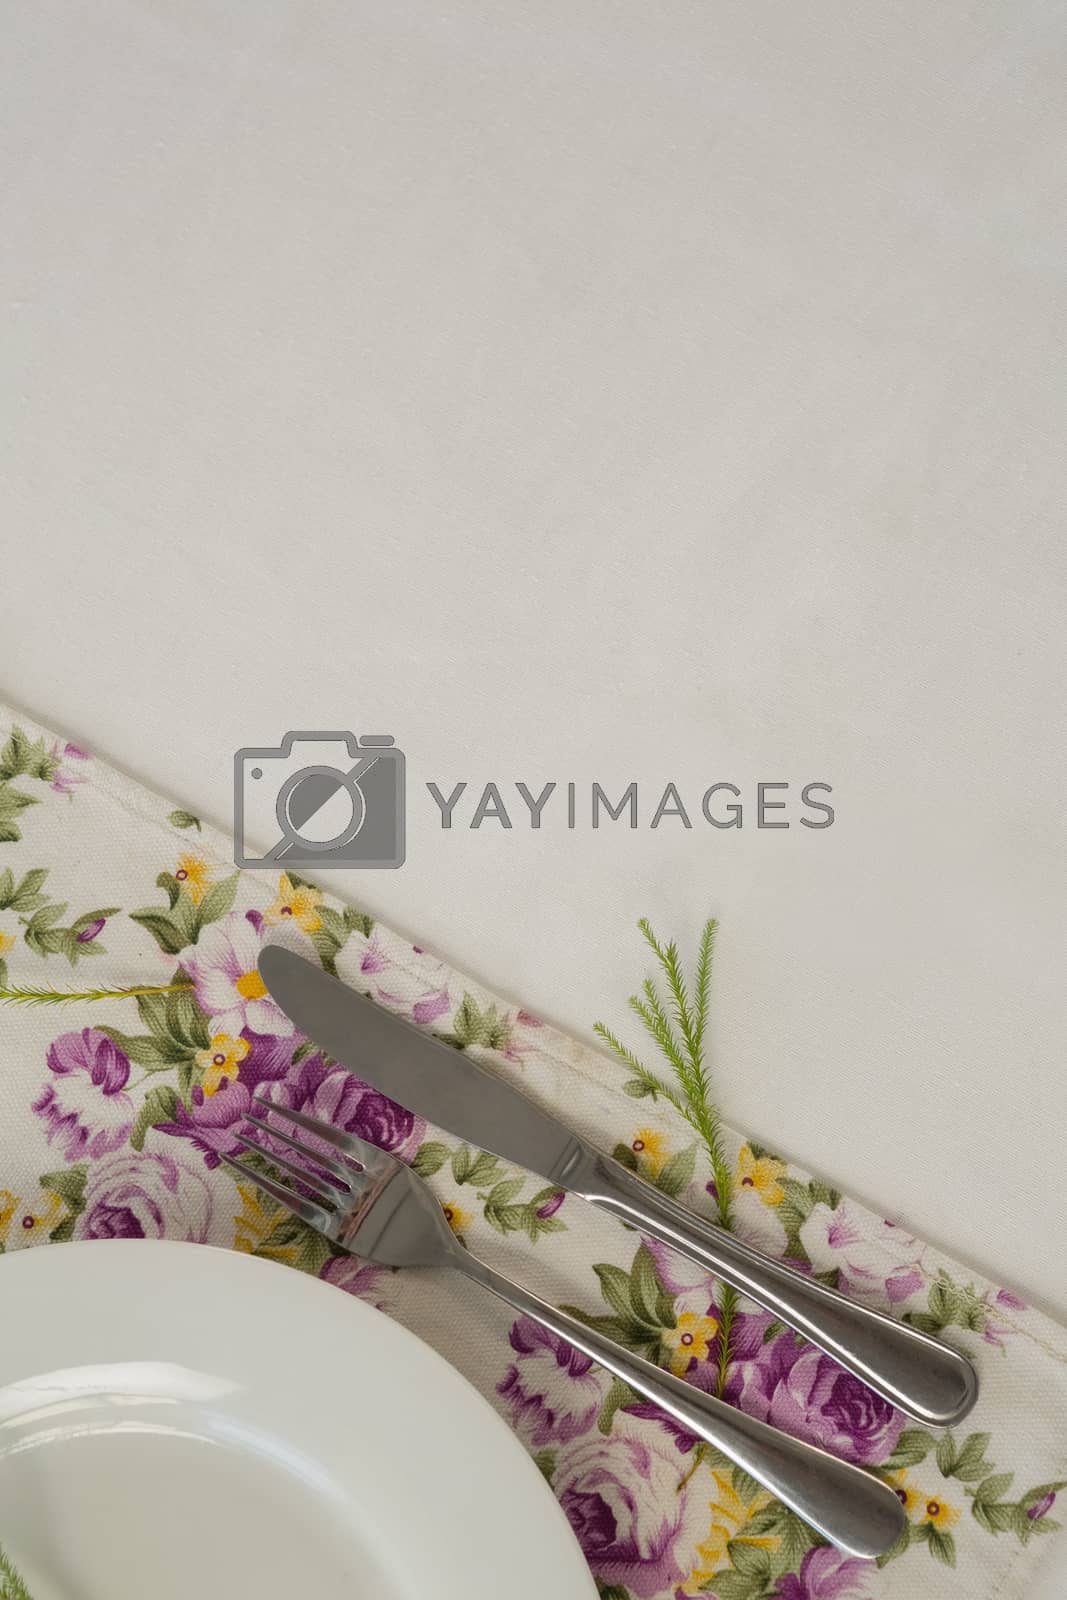 Royalty free image of Elegance table setting by Wavebreakmedia